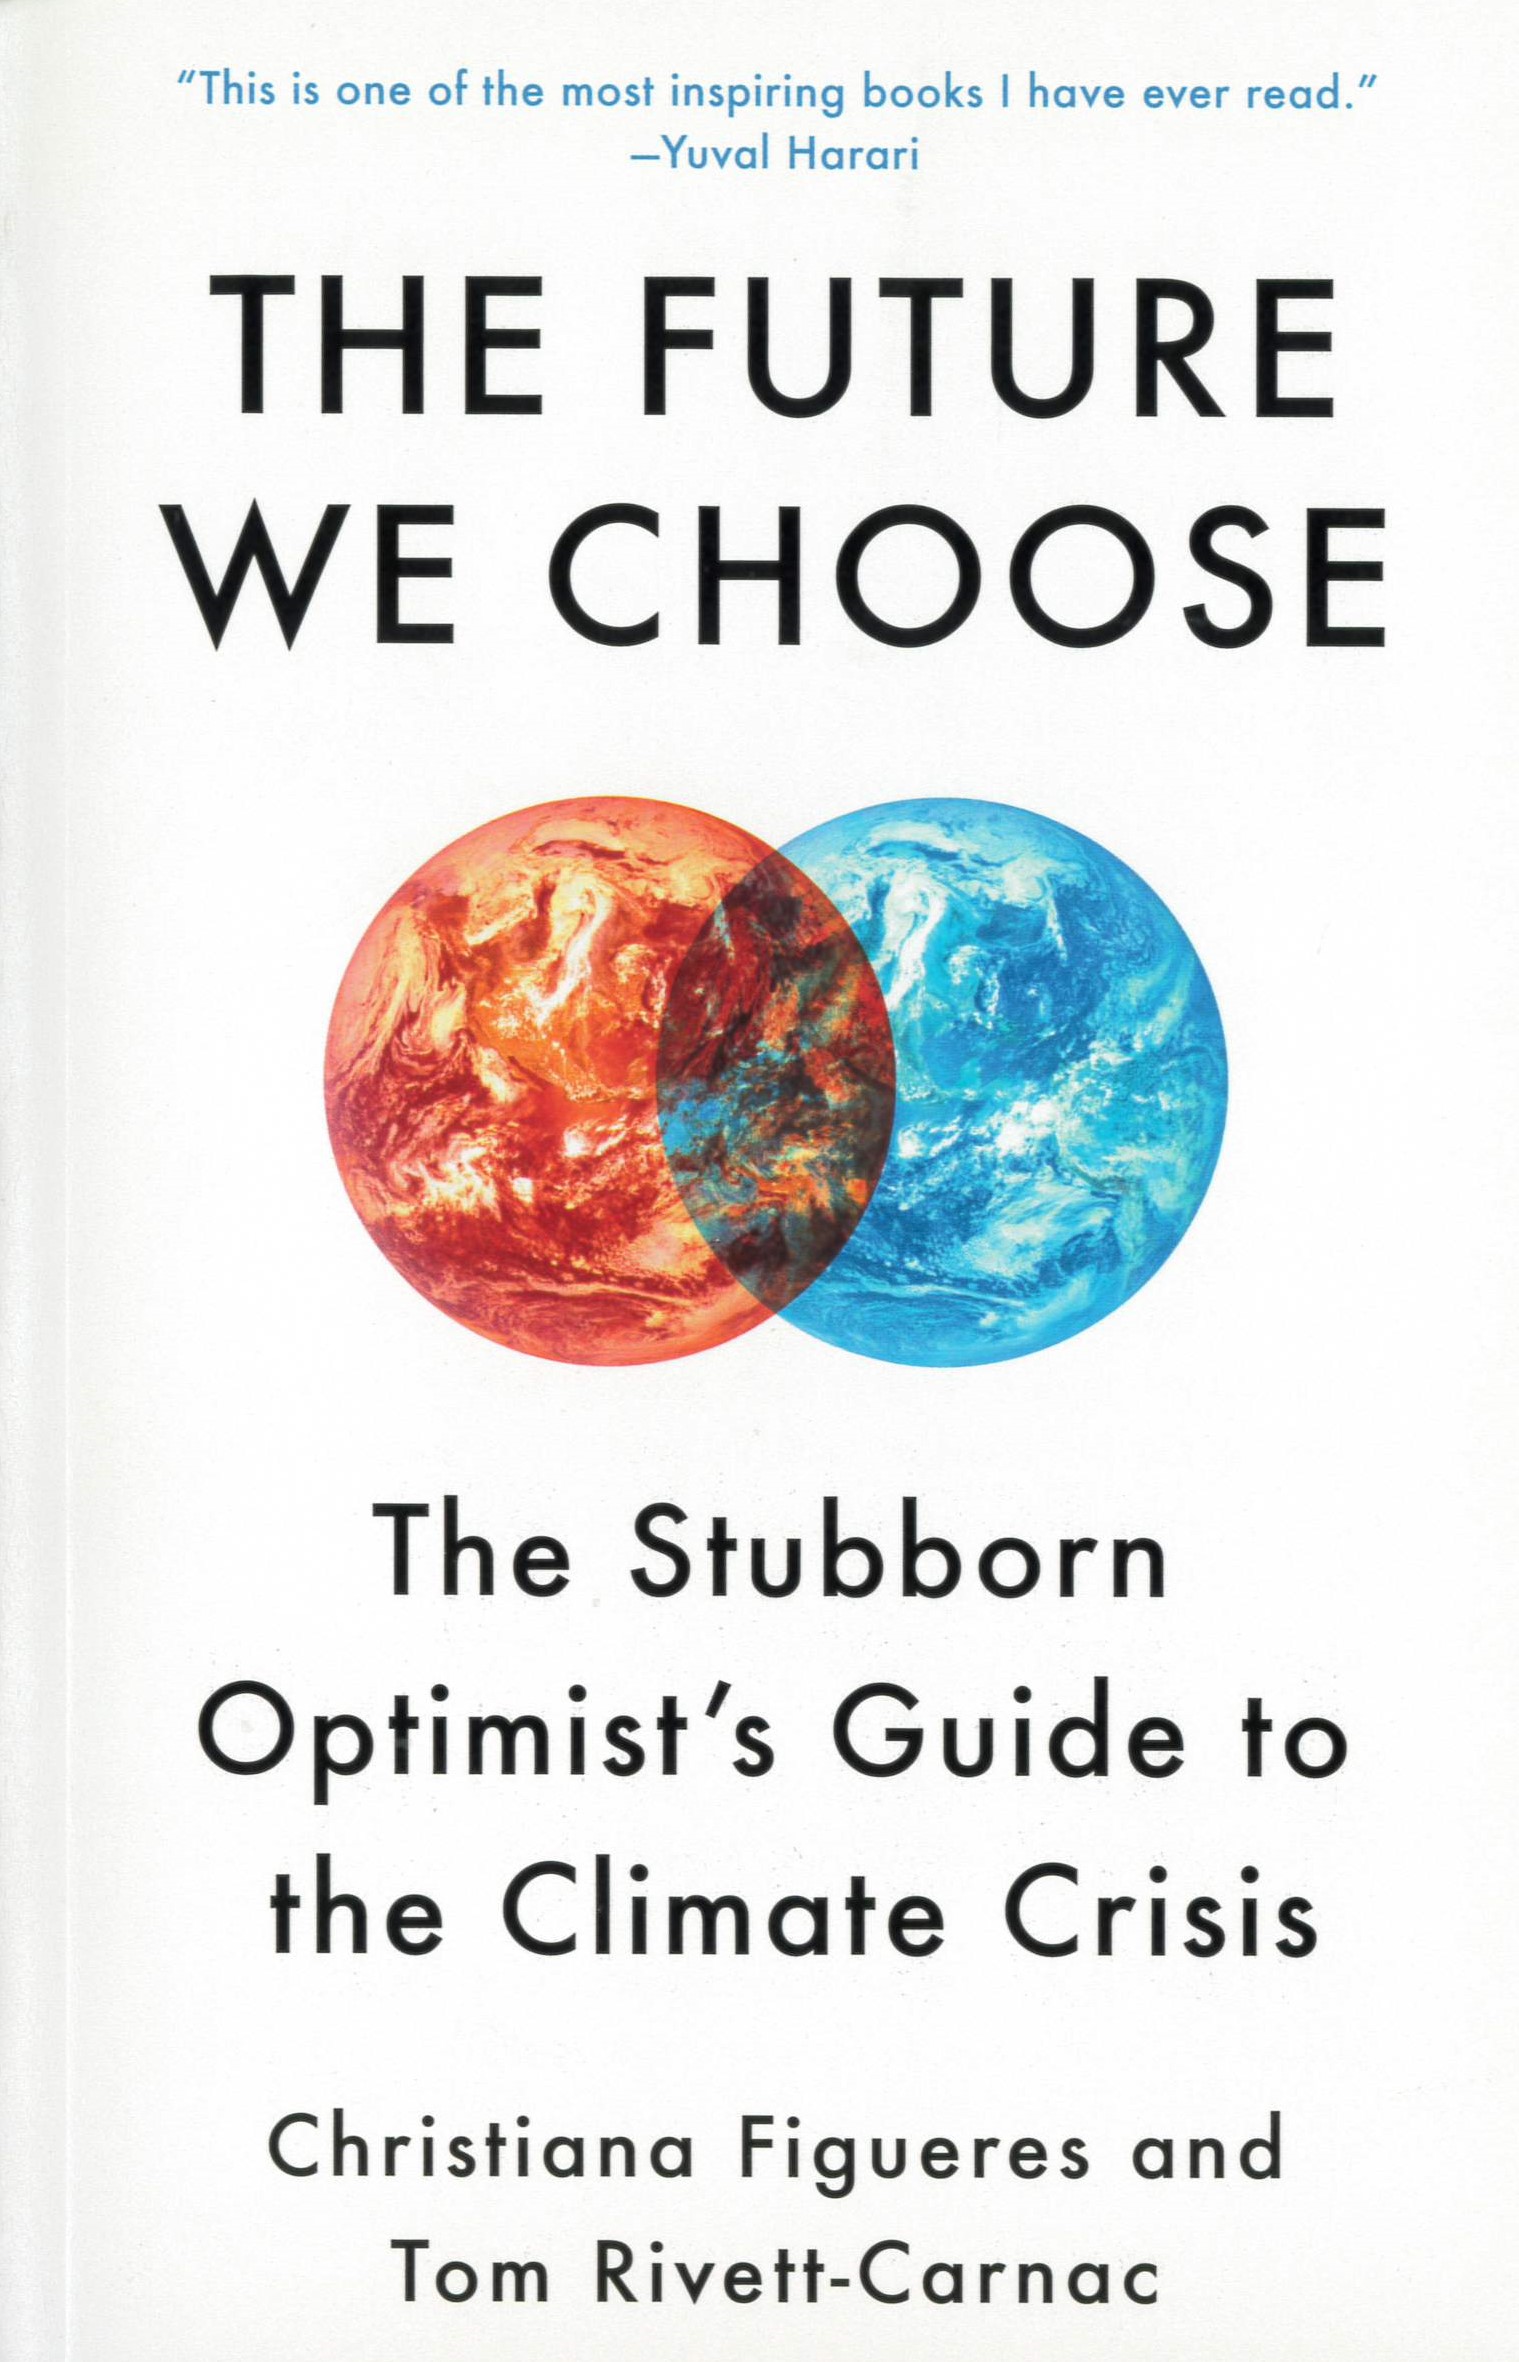 The future we choose : the stubborn optimist